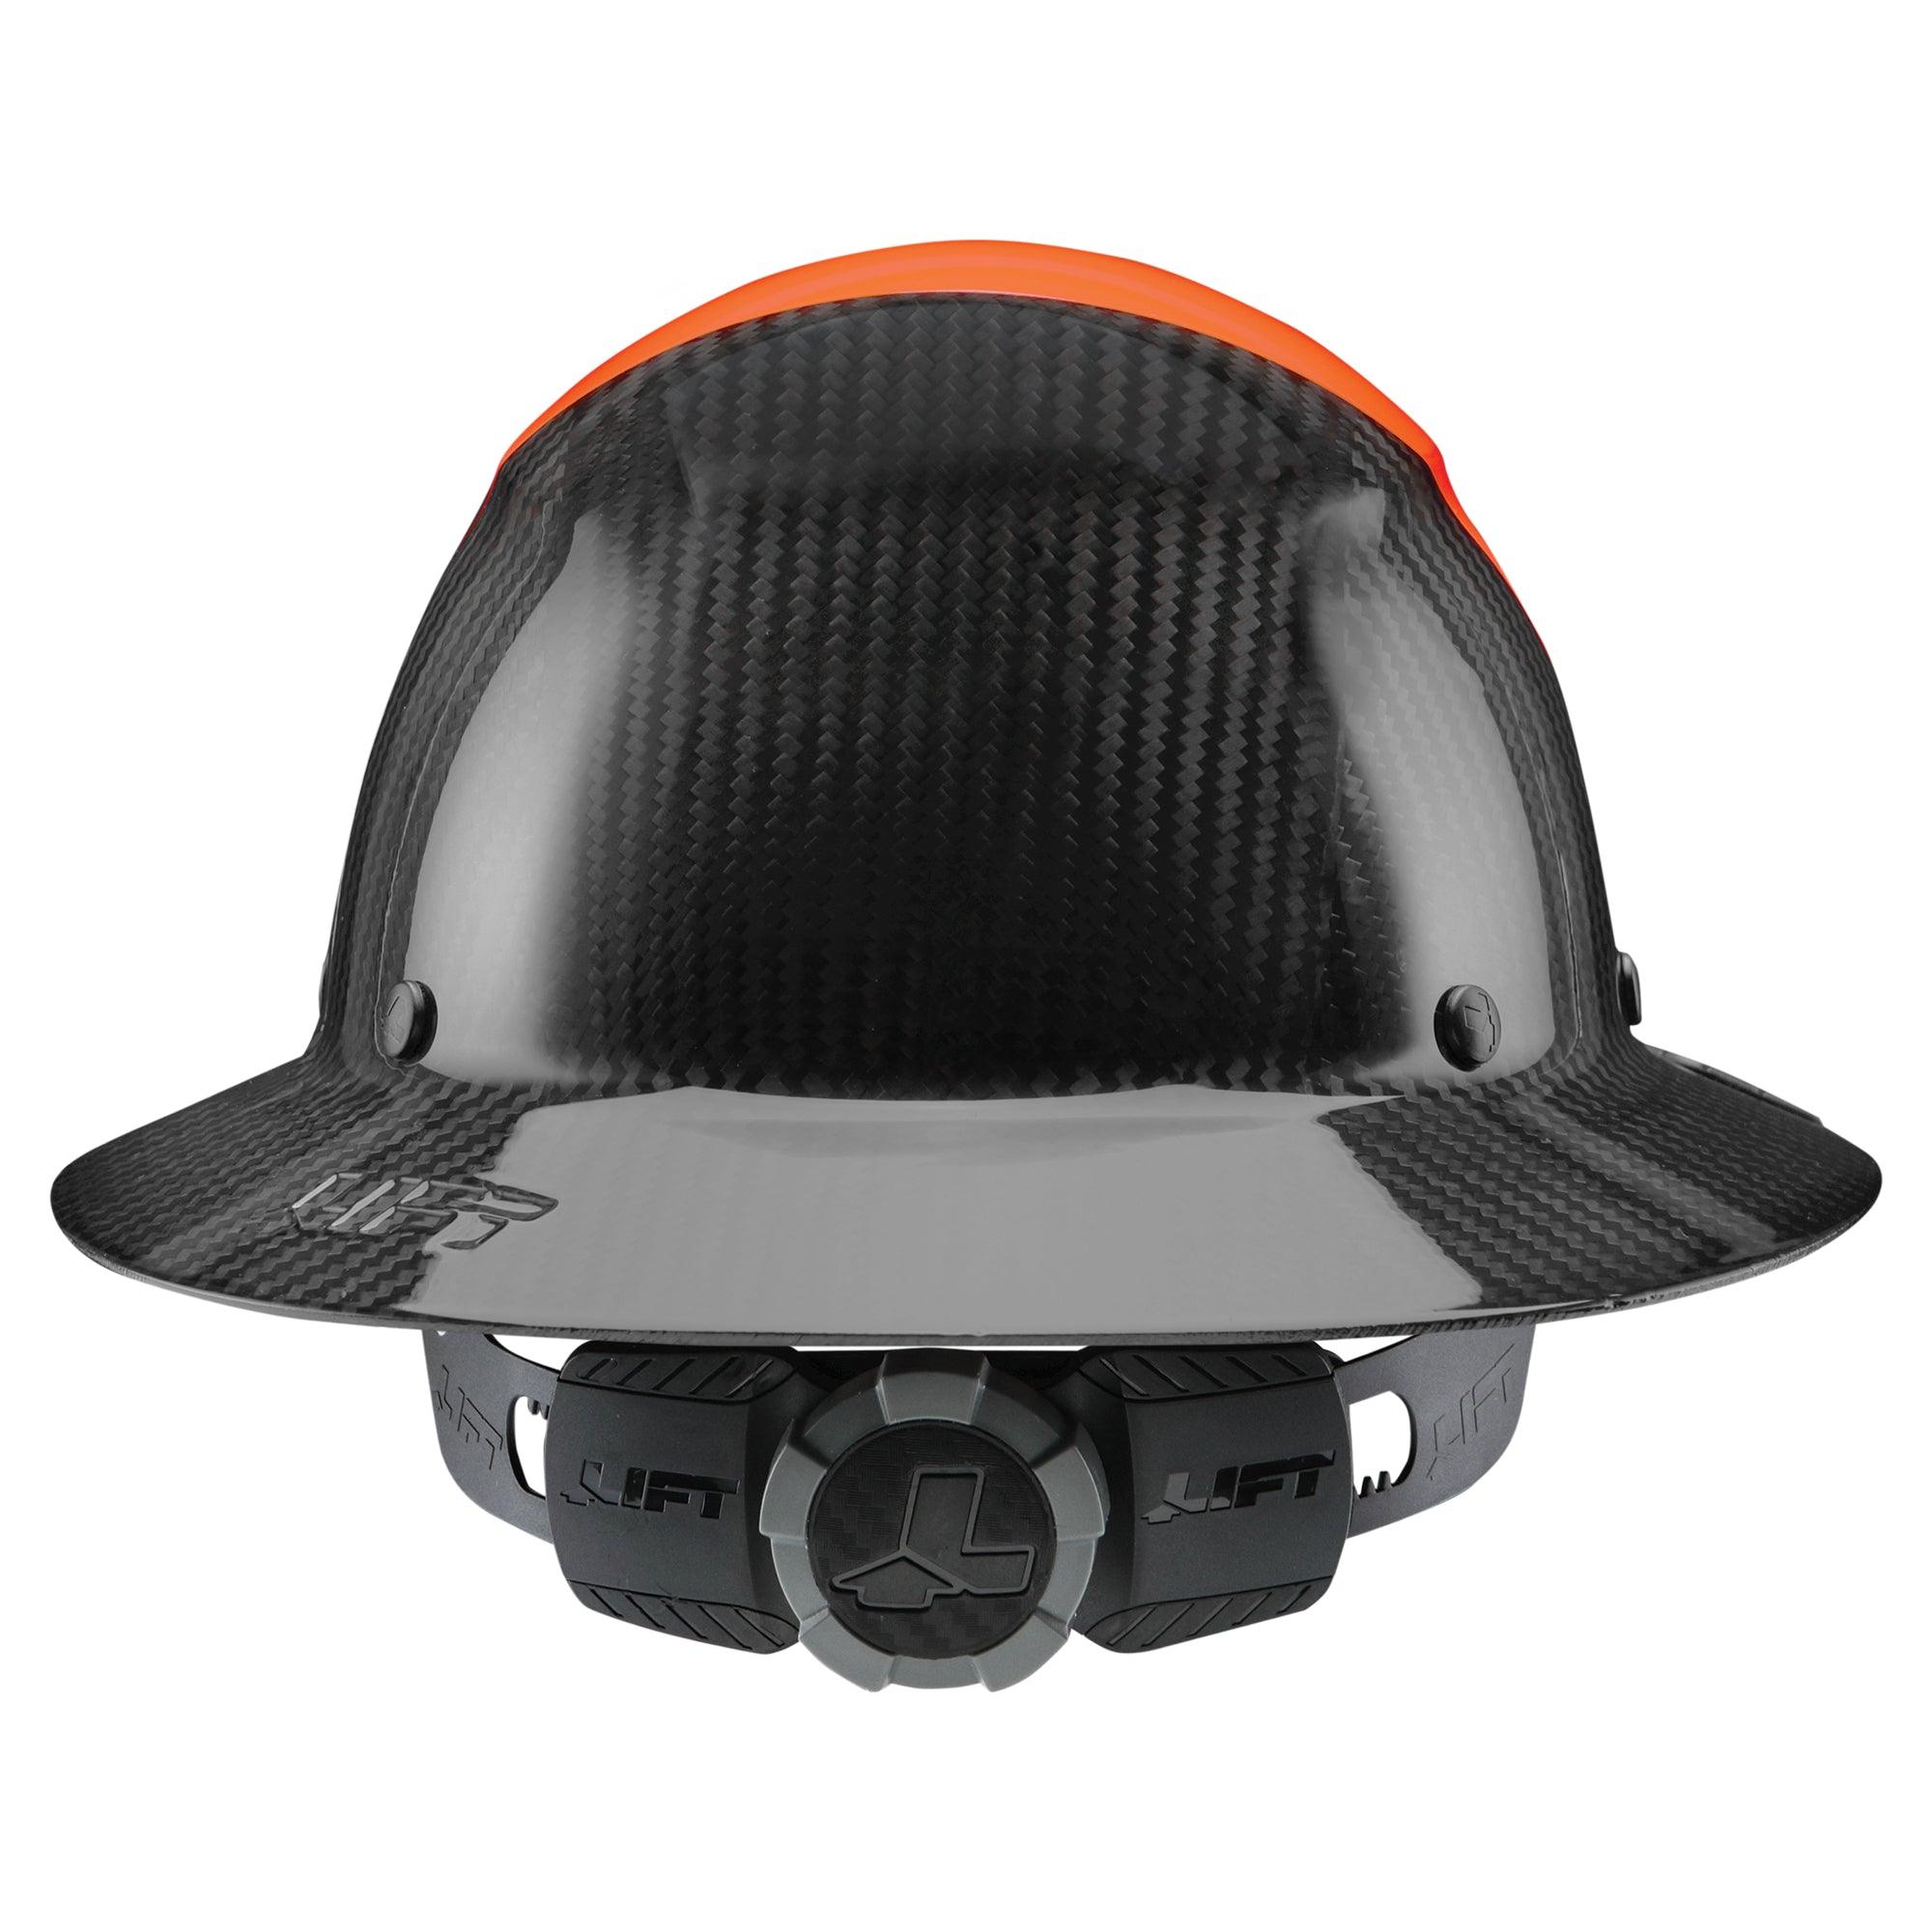 DAX FIFTY50 Carbon Fiber Hardhat - Orange / Black - Purpose-Built / Home of the Trades